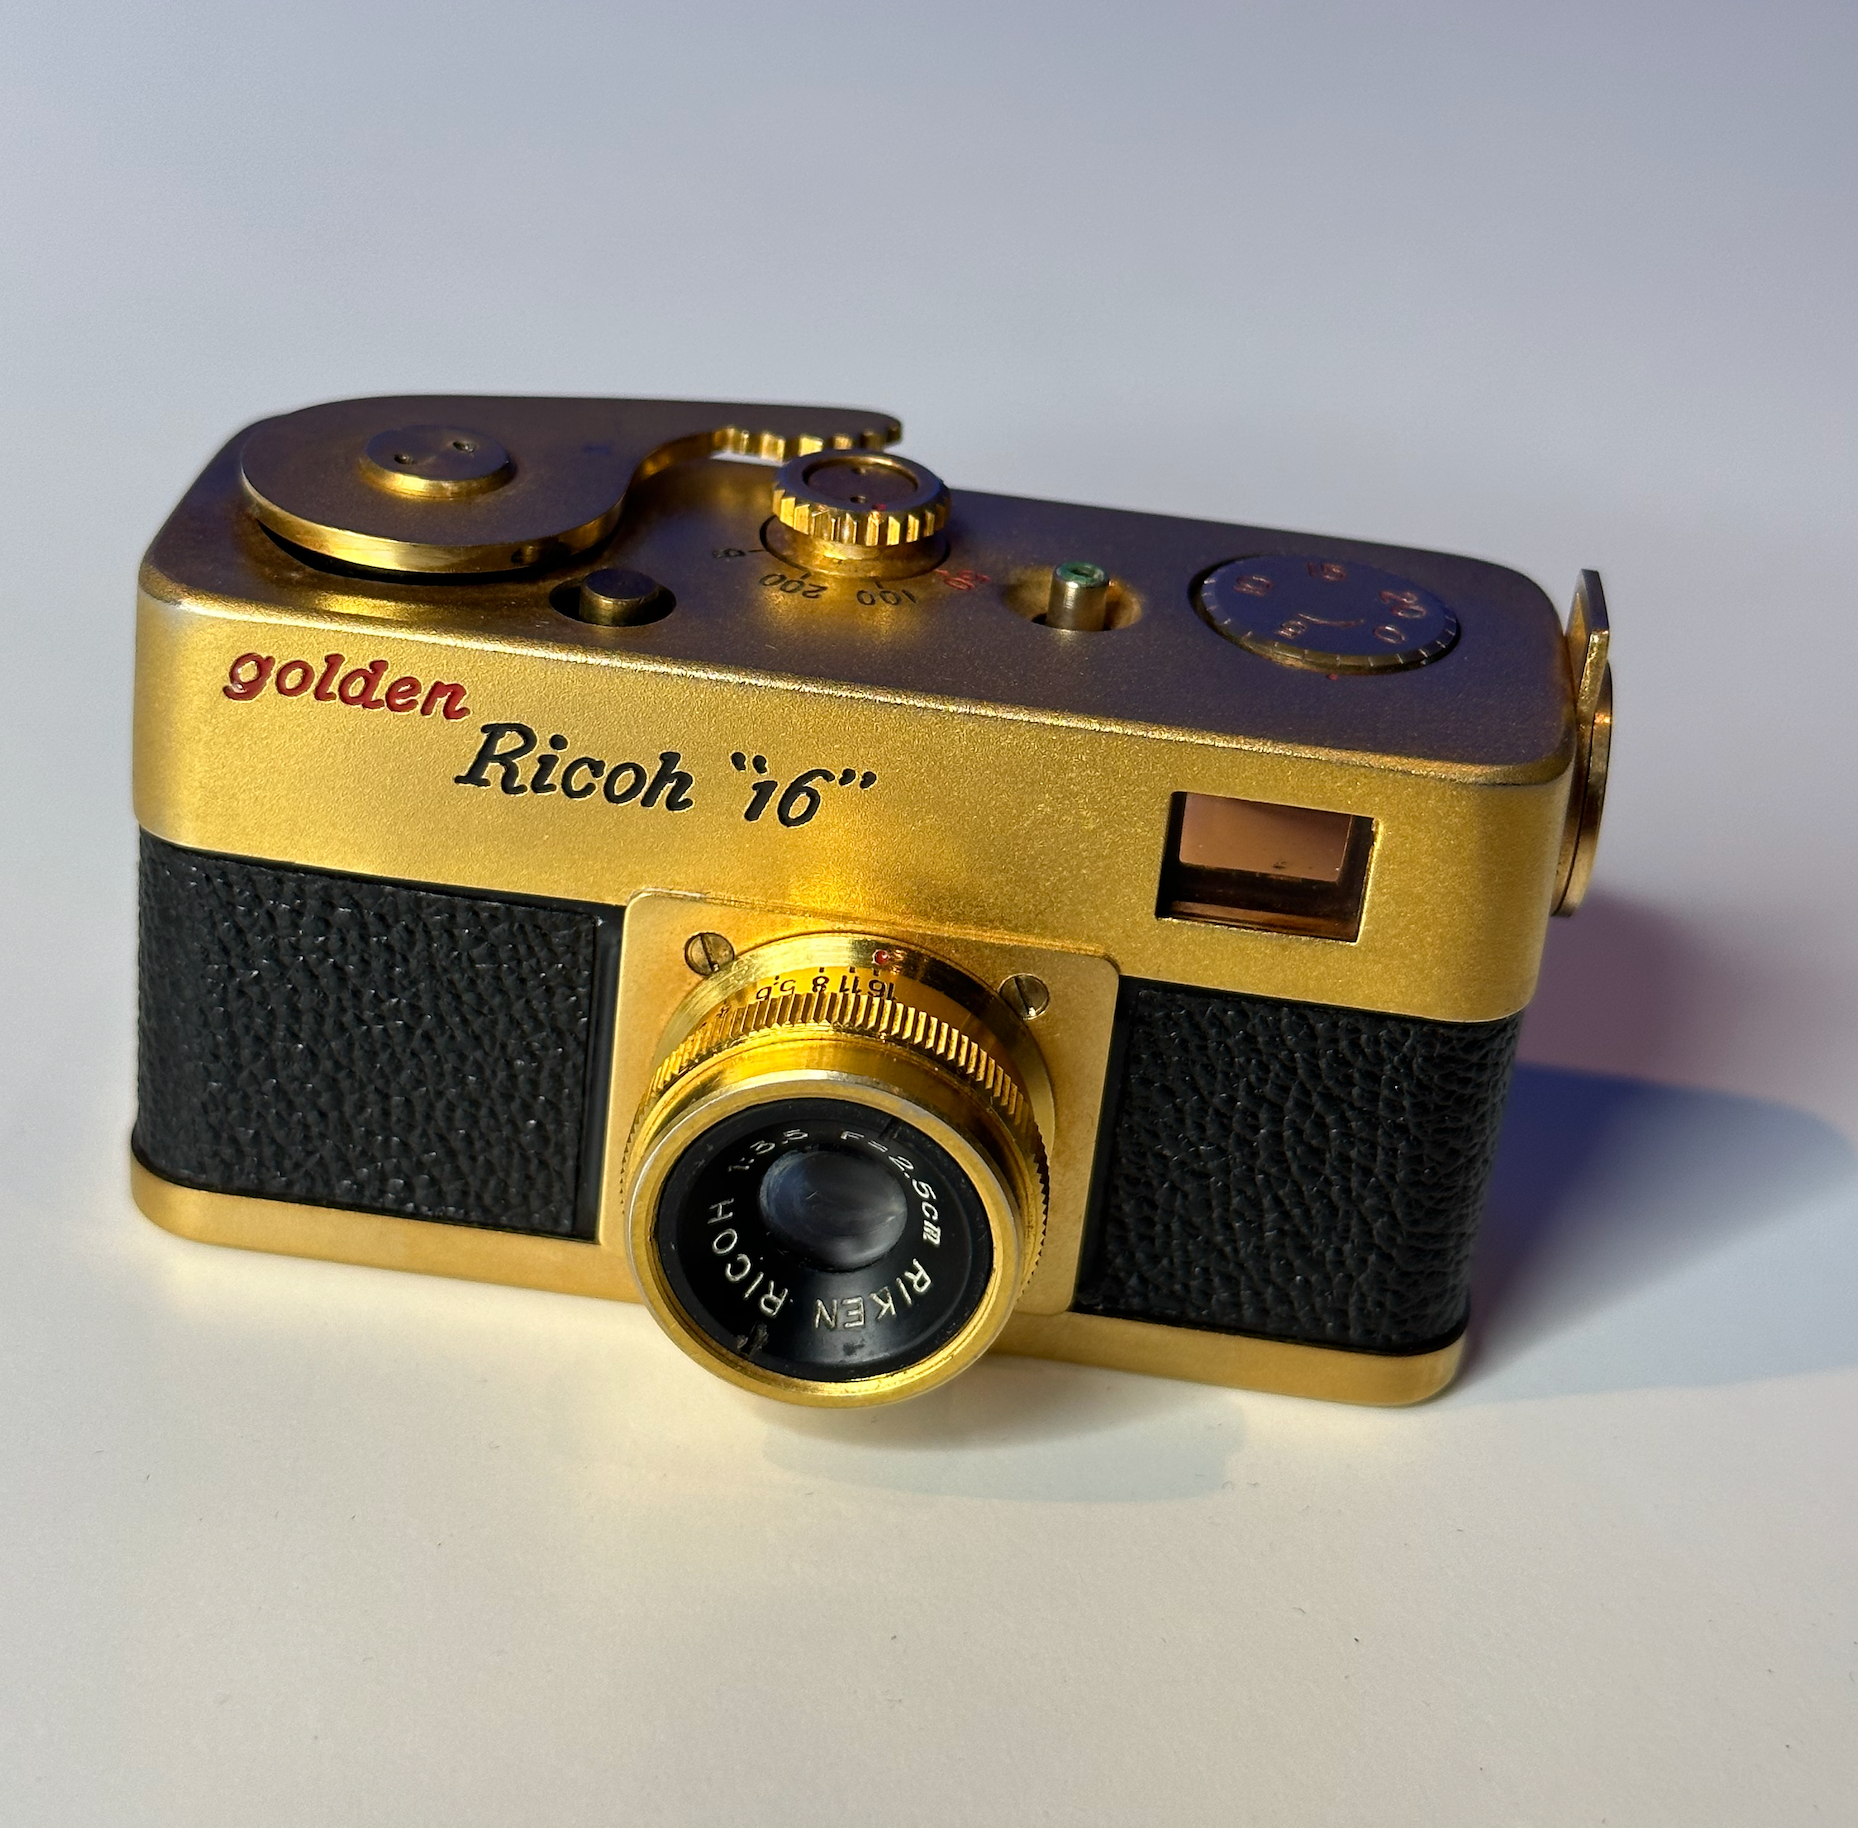 Instagram Secret Sale! Non-Working Golden Ricoh "16" Subminiature Camera